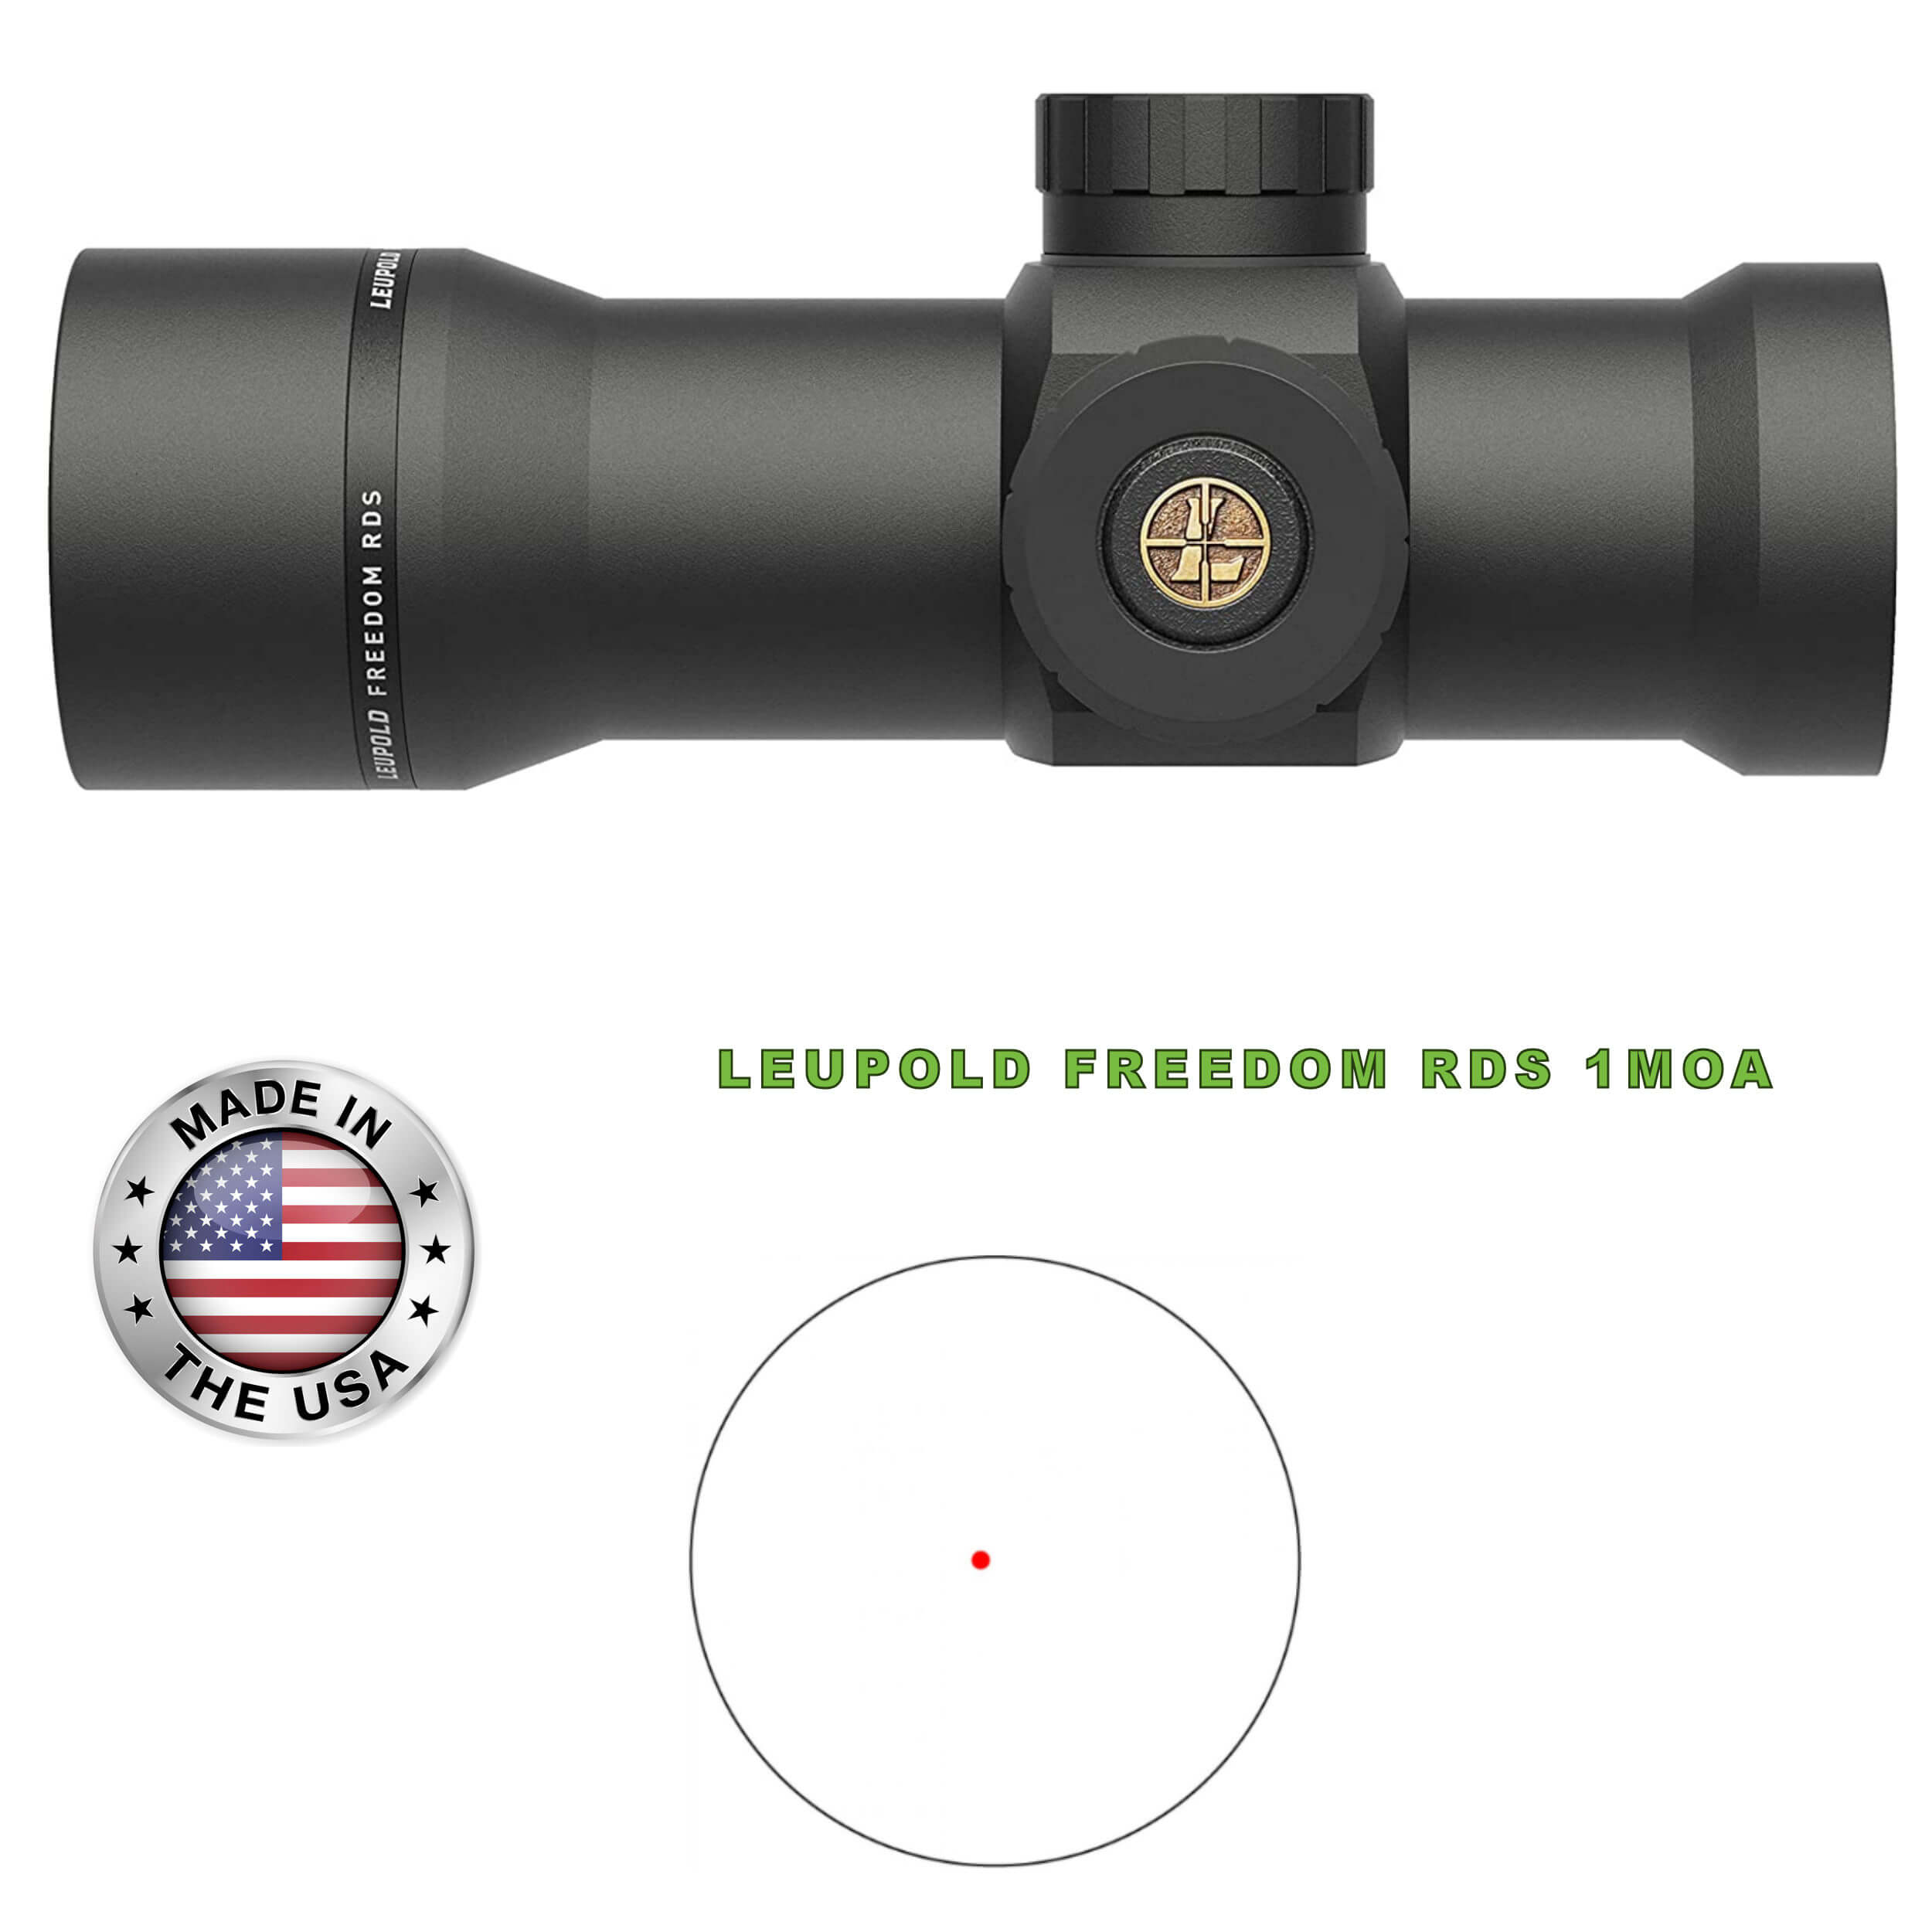 Leupold Freedom RDS Leuchtpunktvisier 1MOA - Red Dot